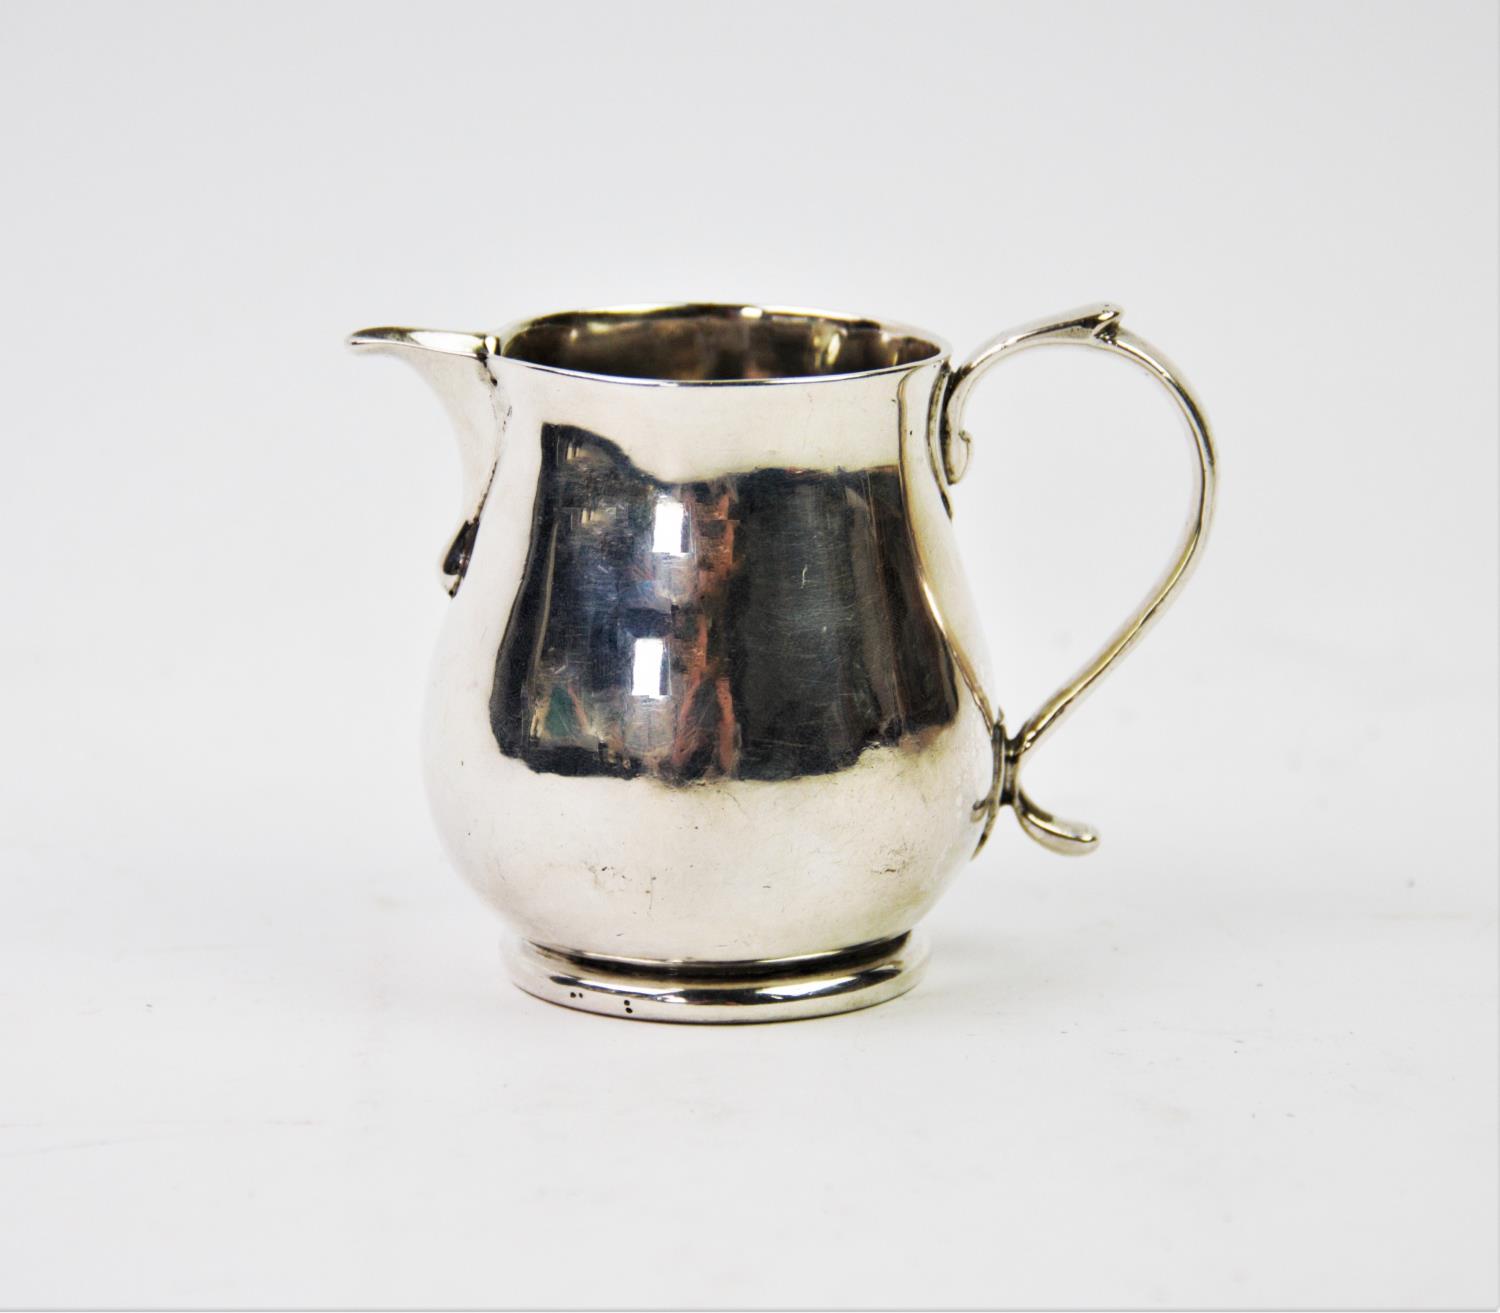 A George I silver cream jug, James Goodwin, London 1718, of plain polished form, with sparrow beak